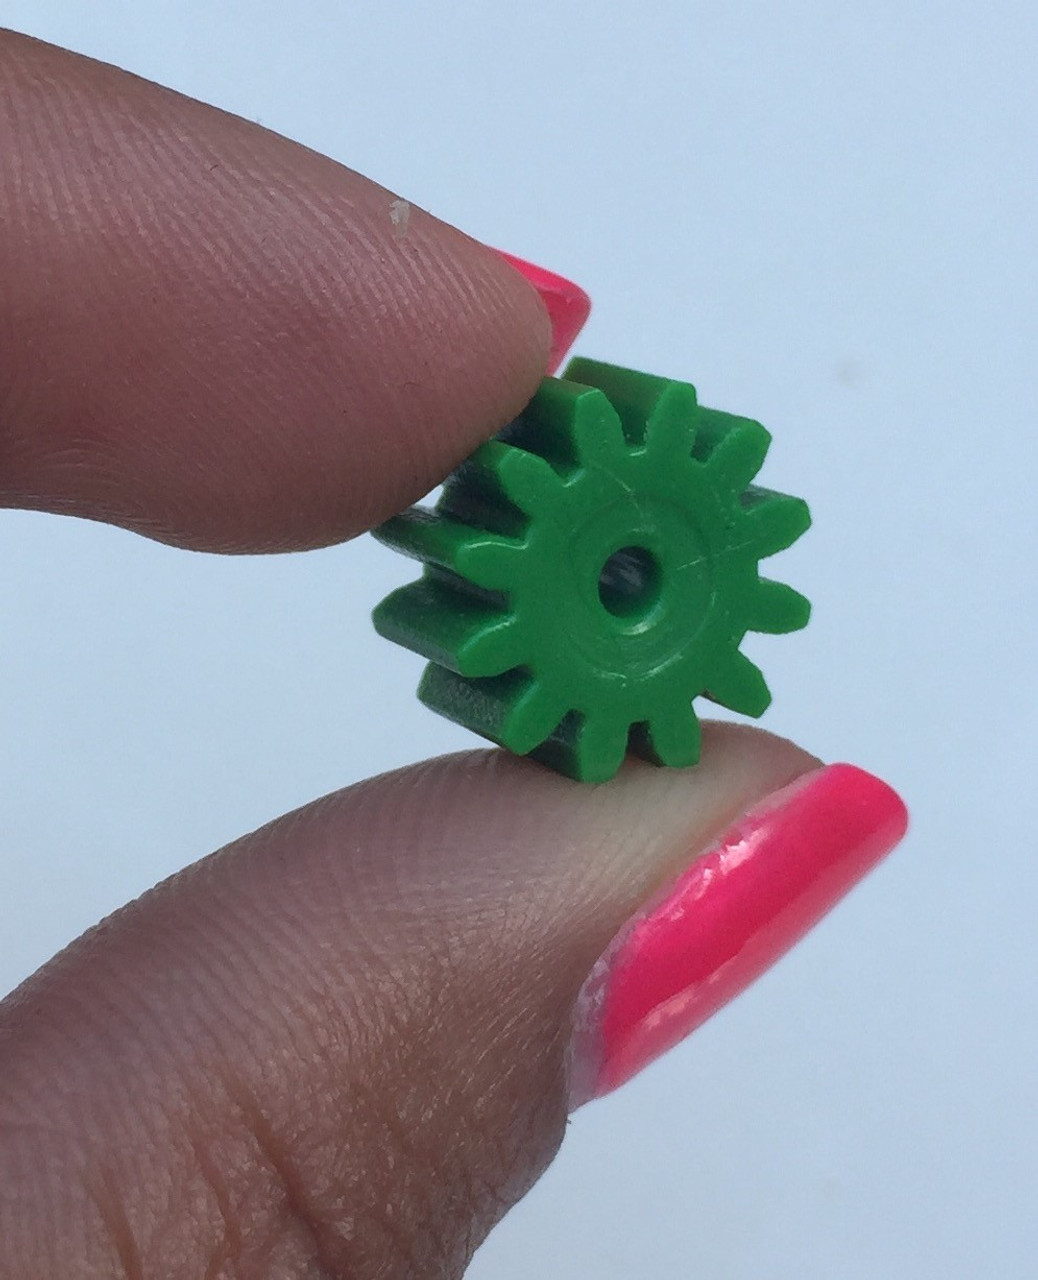 Small Gear, 2.5-mm hole